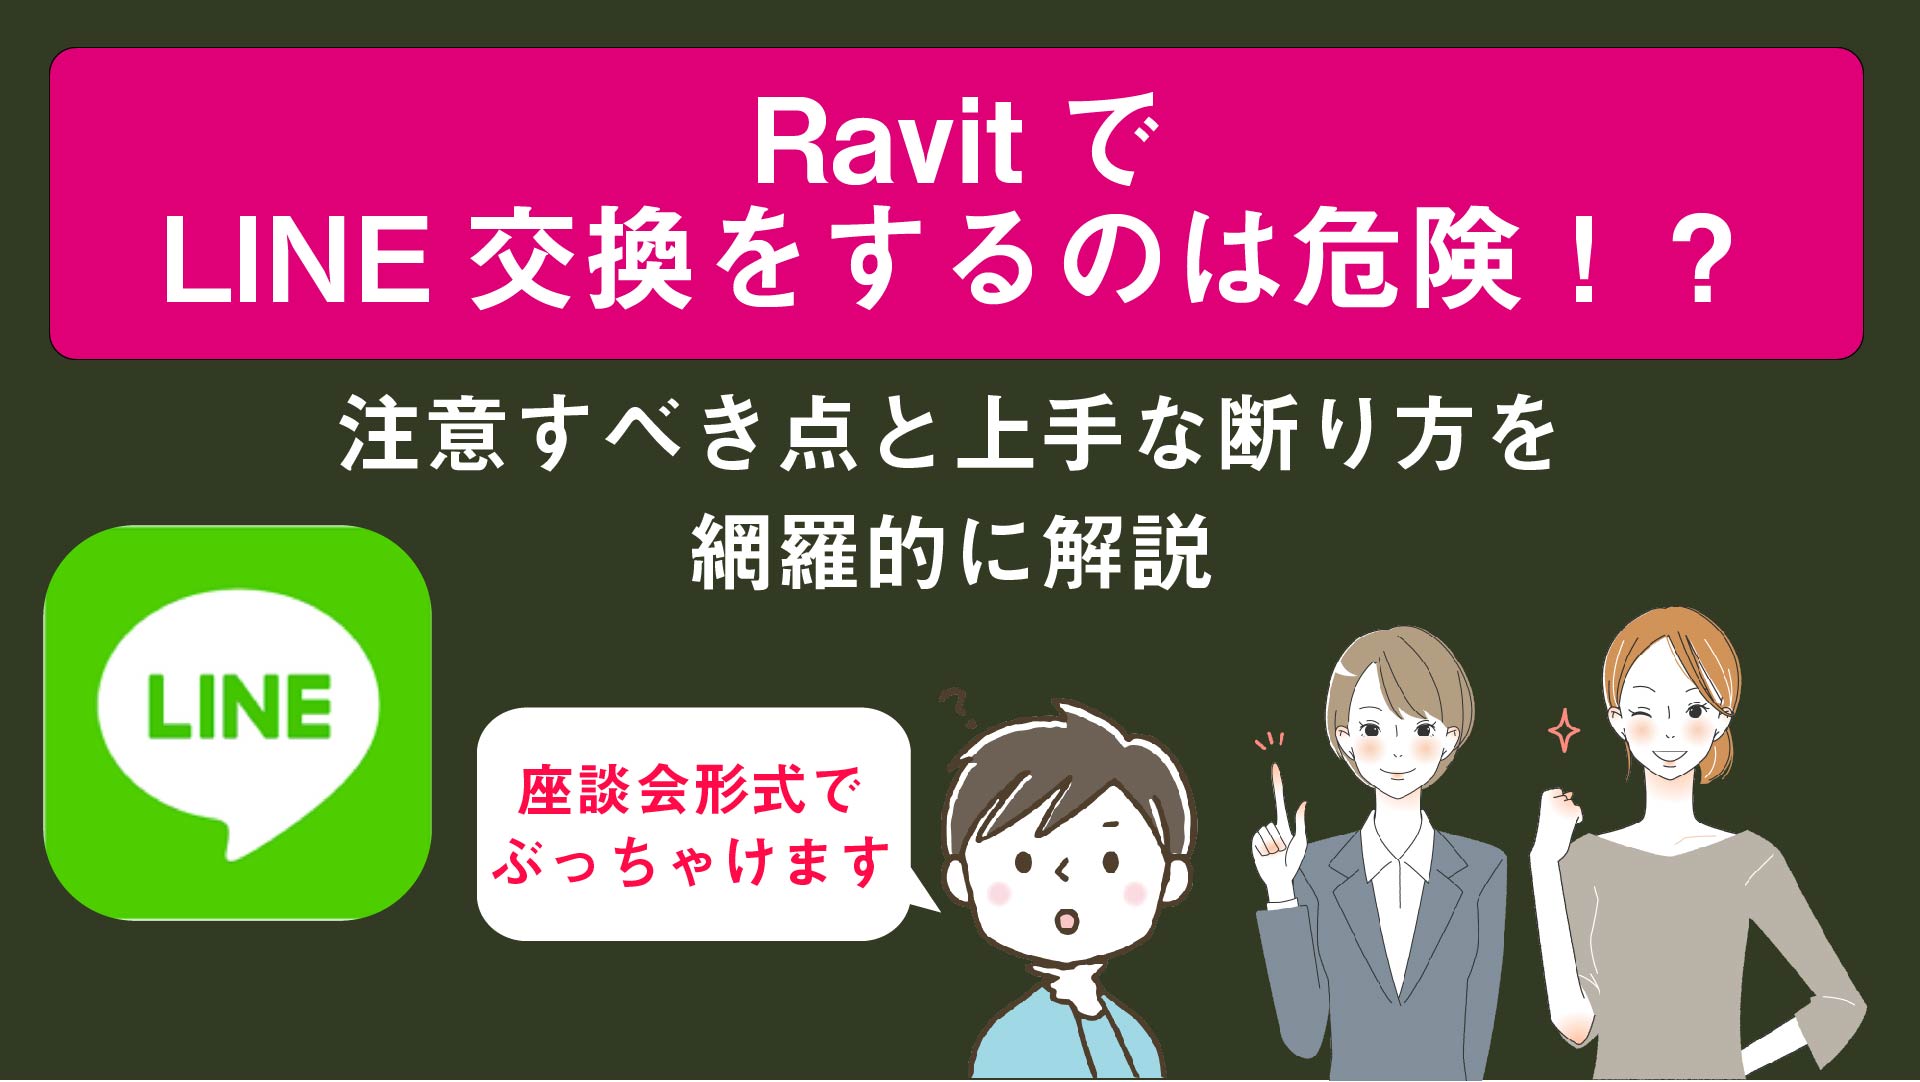 Ravitでline交換をするのは危険 注意すべき点と上手な断り方を網羅的に解説 Ravitキューピッド